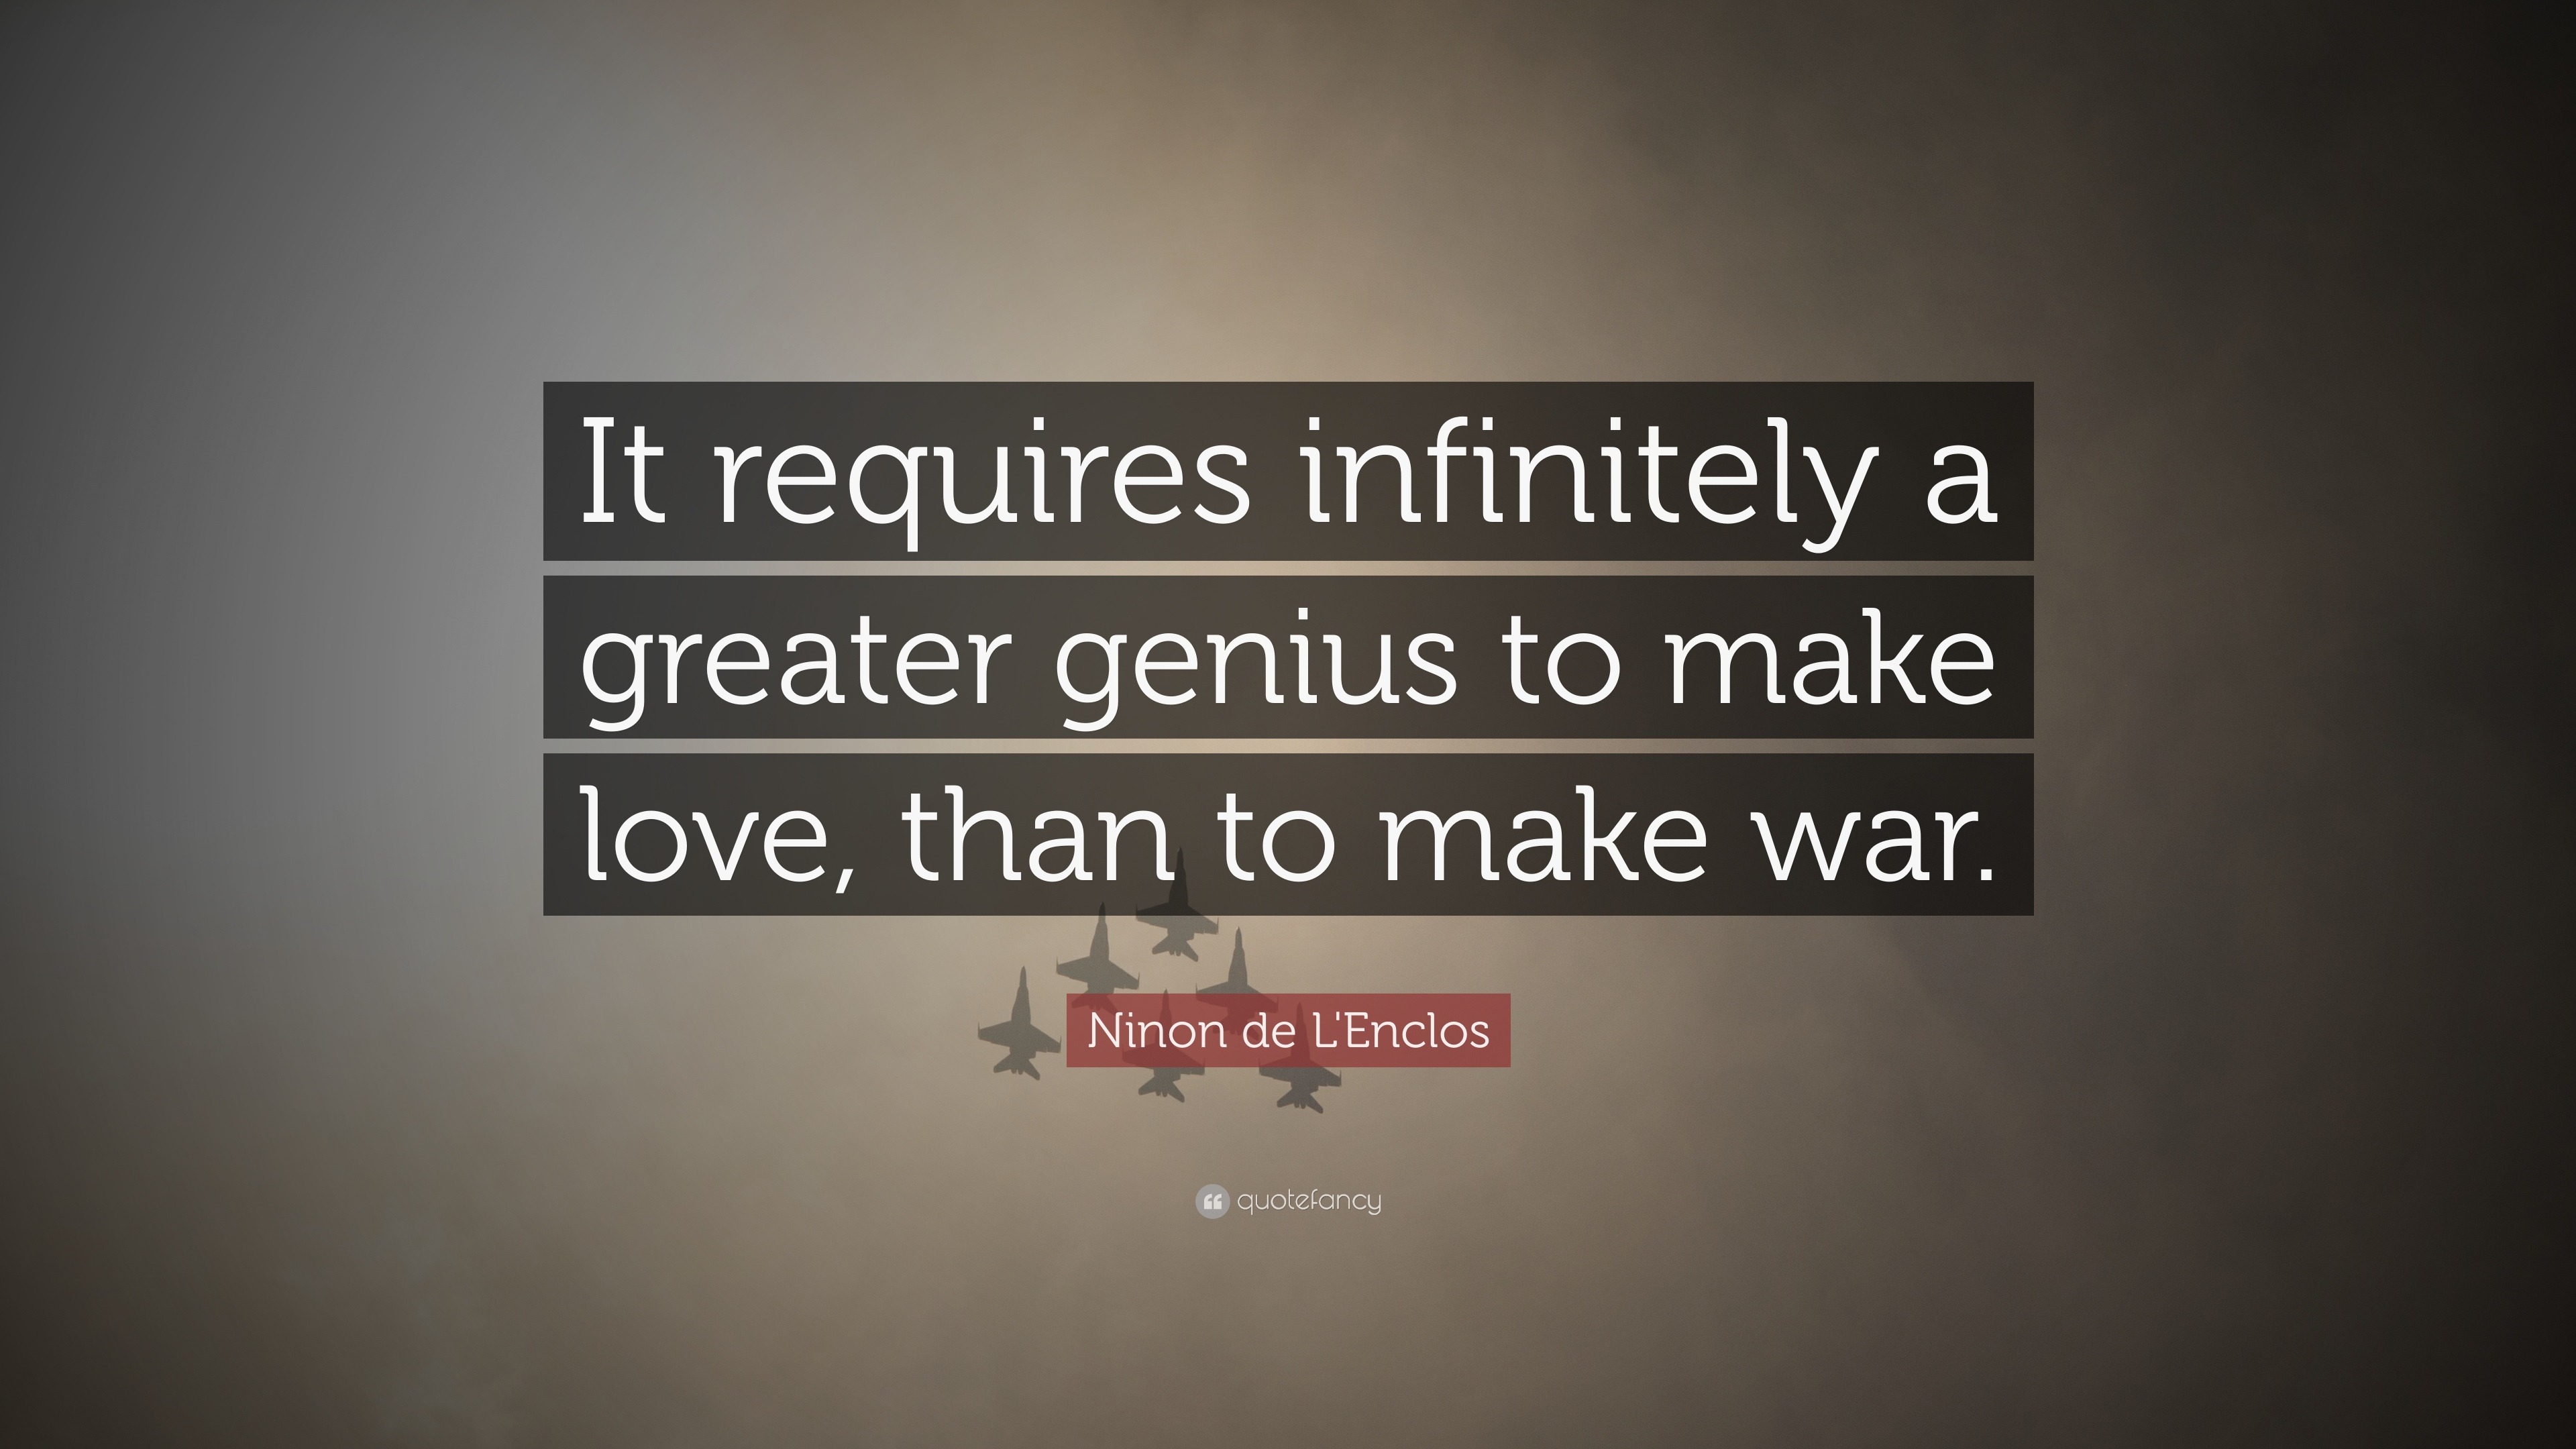 Ninon de L'Enclos Quote: “It requires infinitely a greater genius to ...